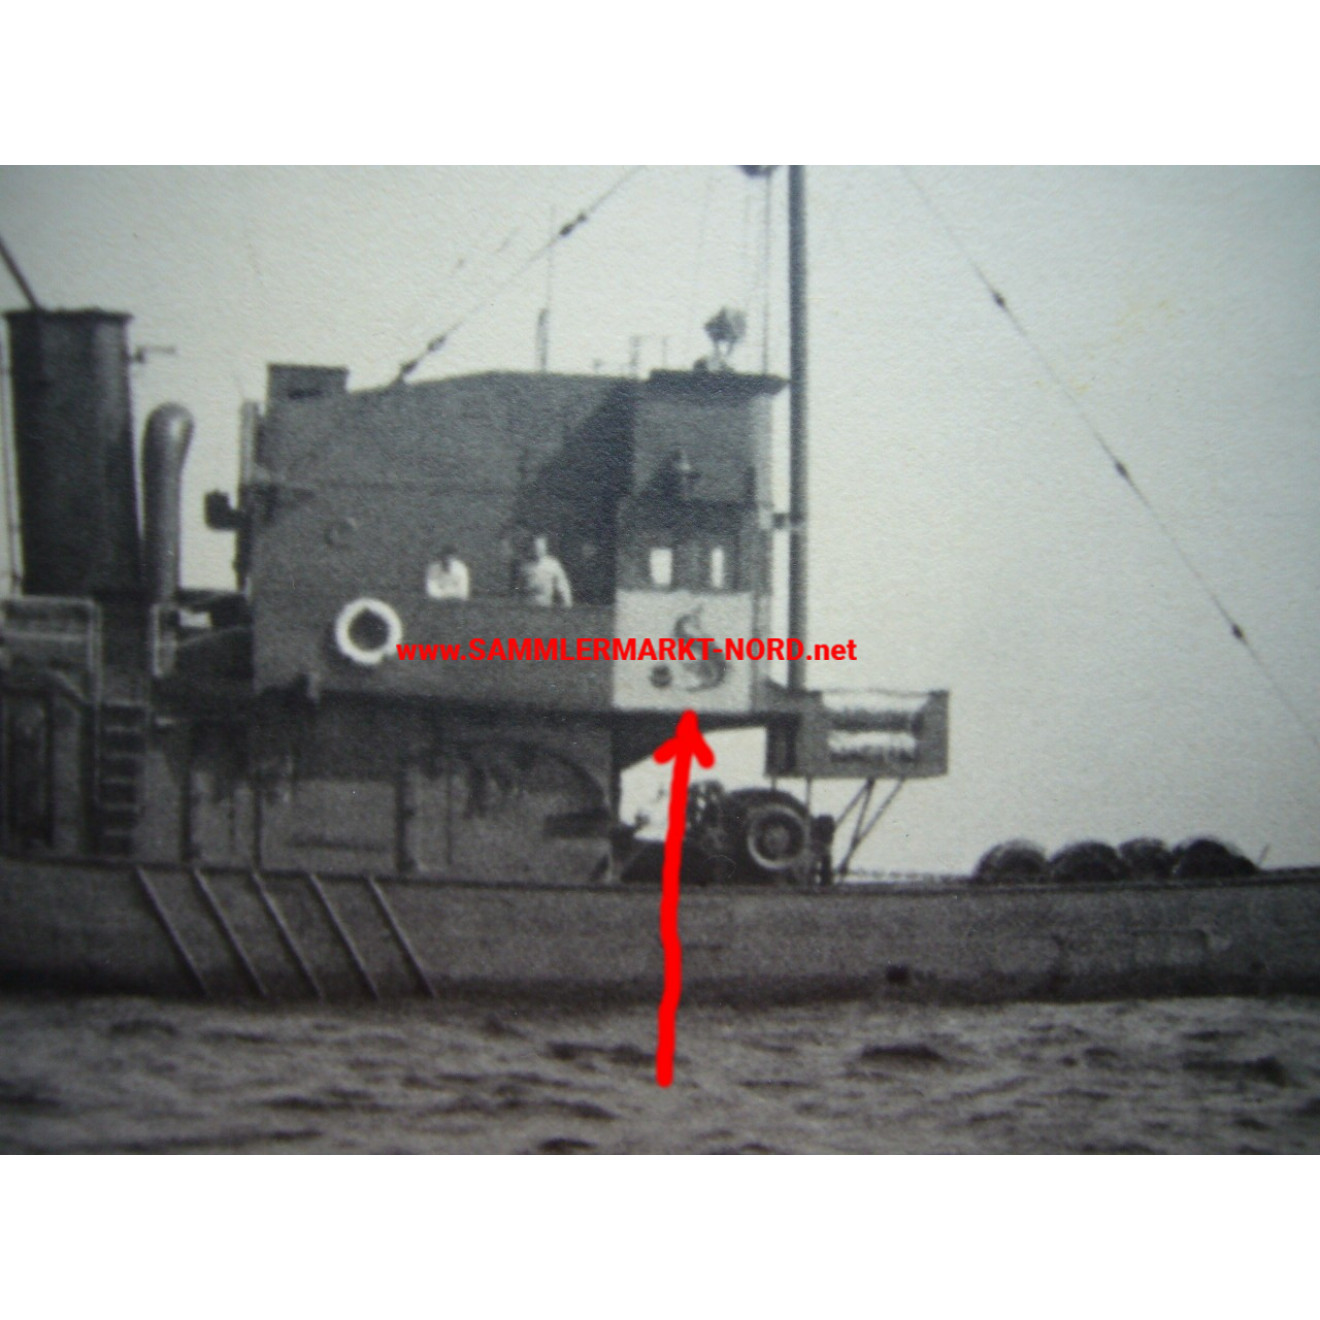 Kriegsmarine - minesweeper with badge